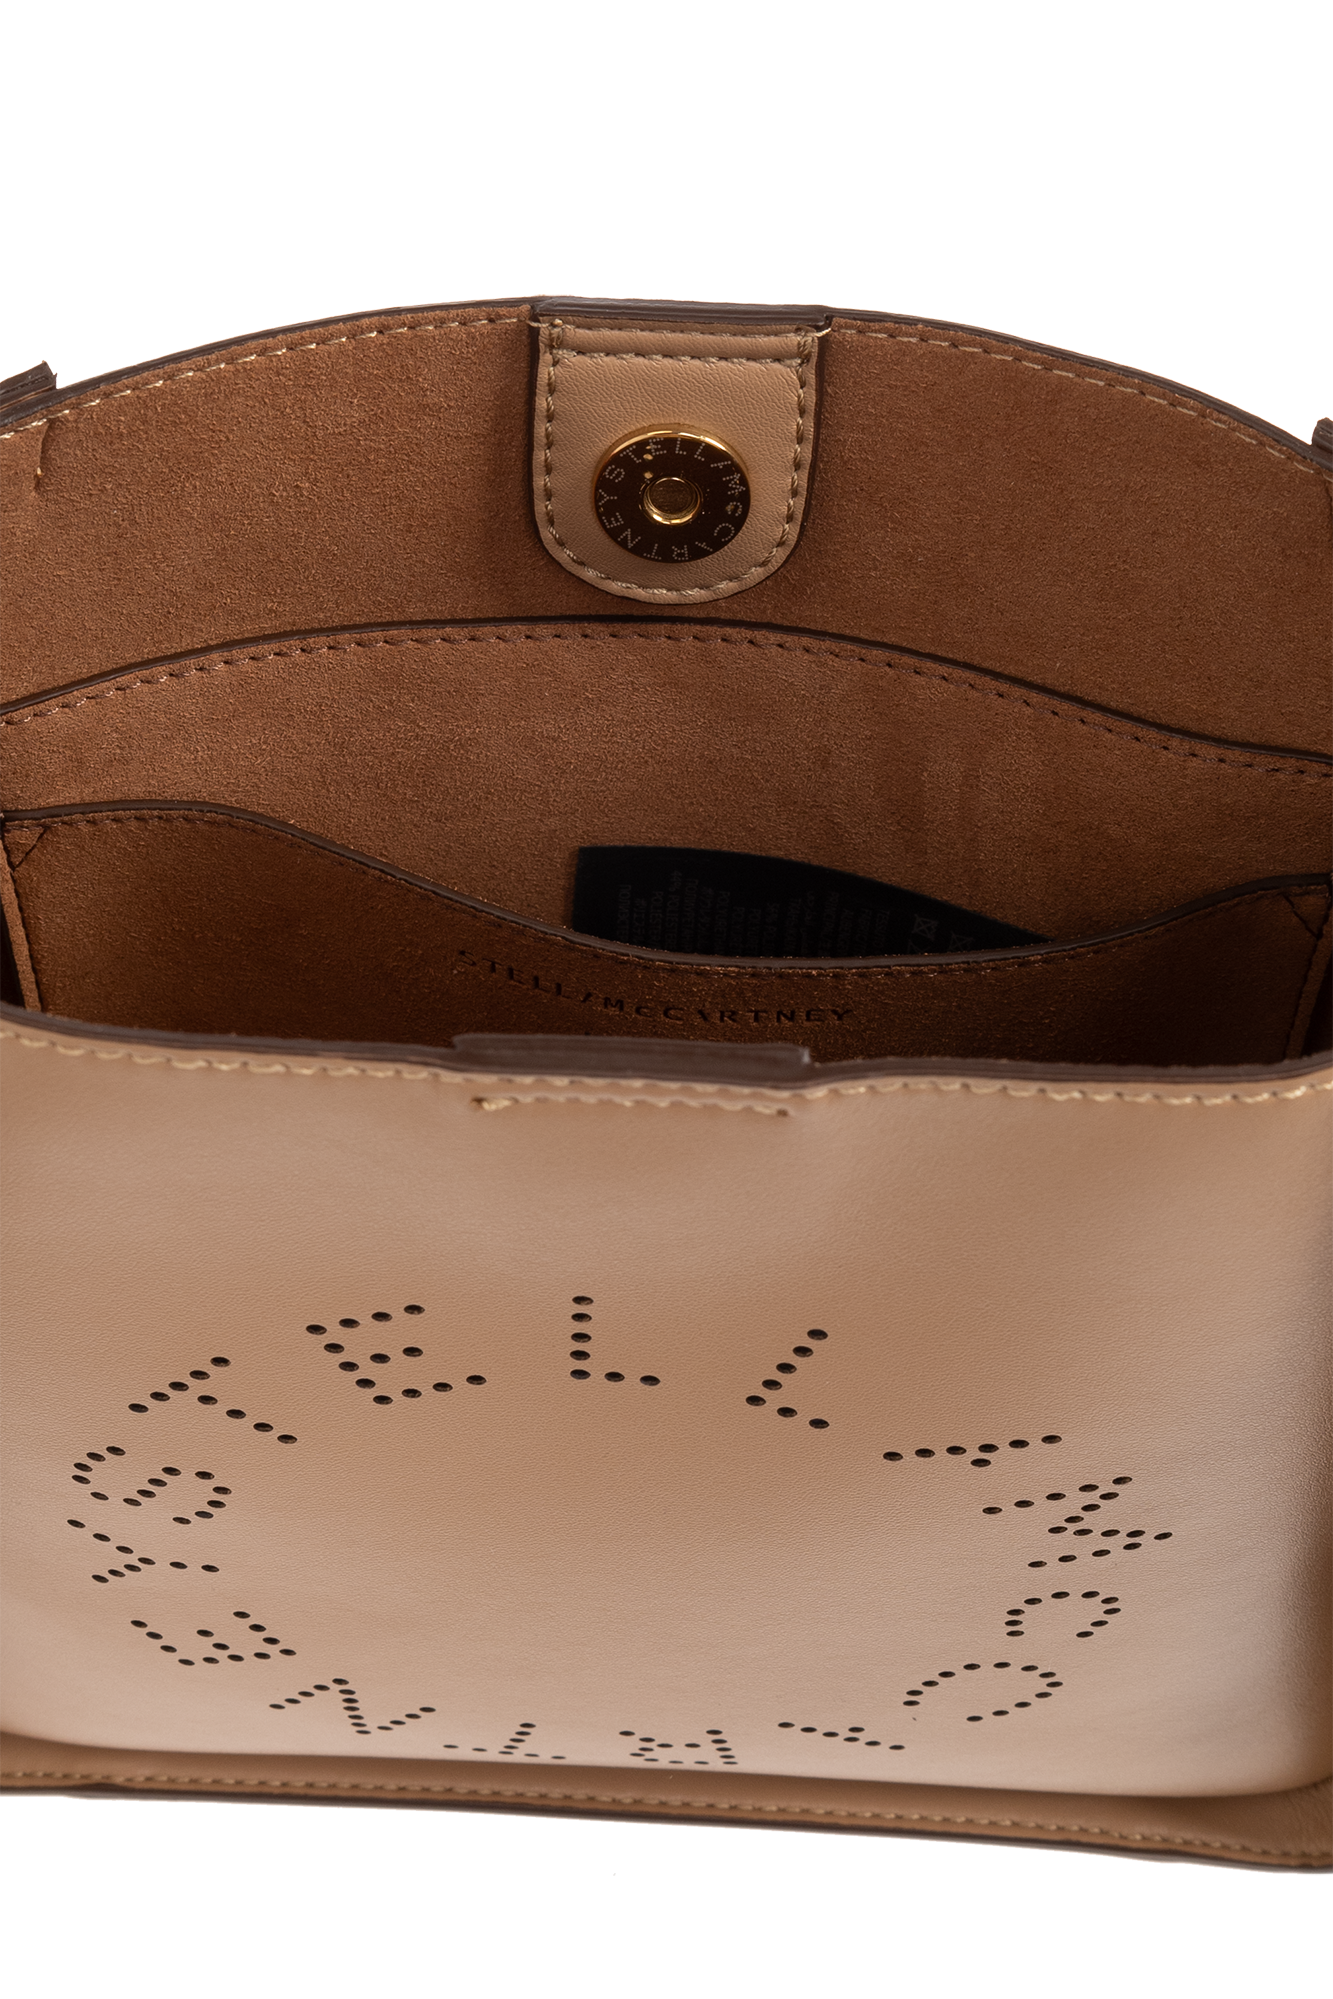 Black Shoulder bag with logo Stella McCartney - Vitkac Canada